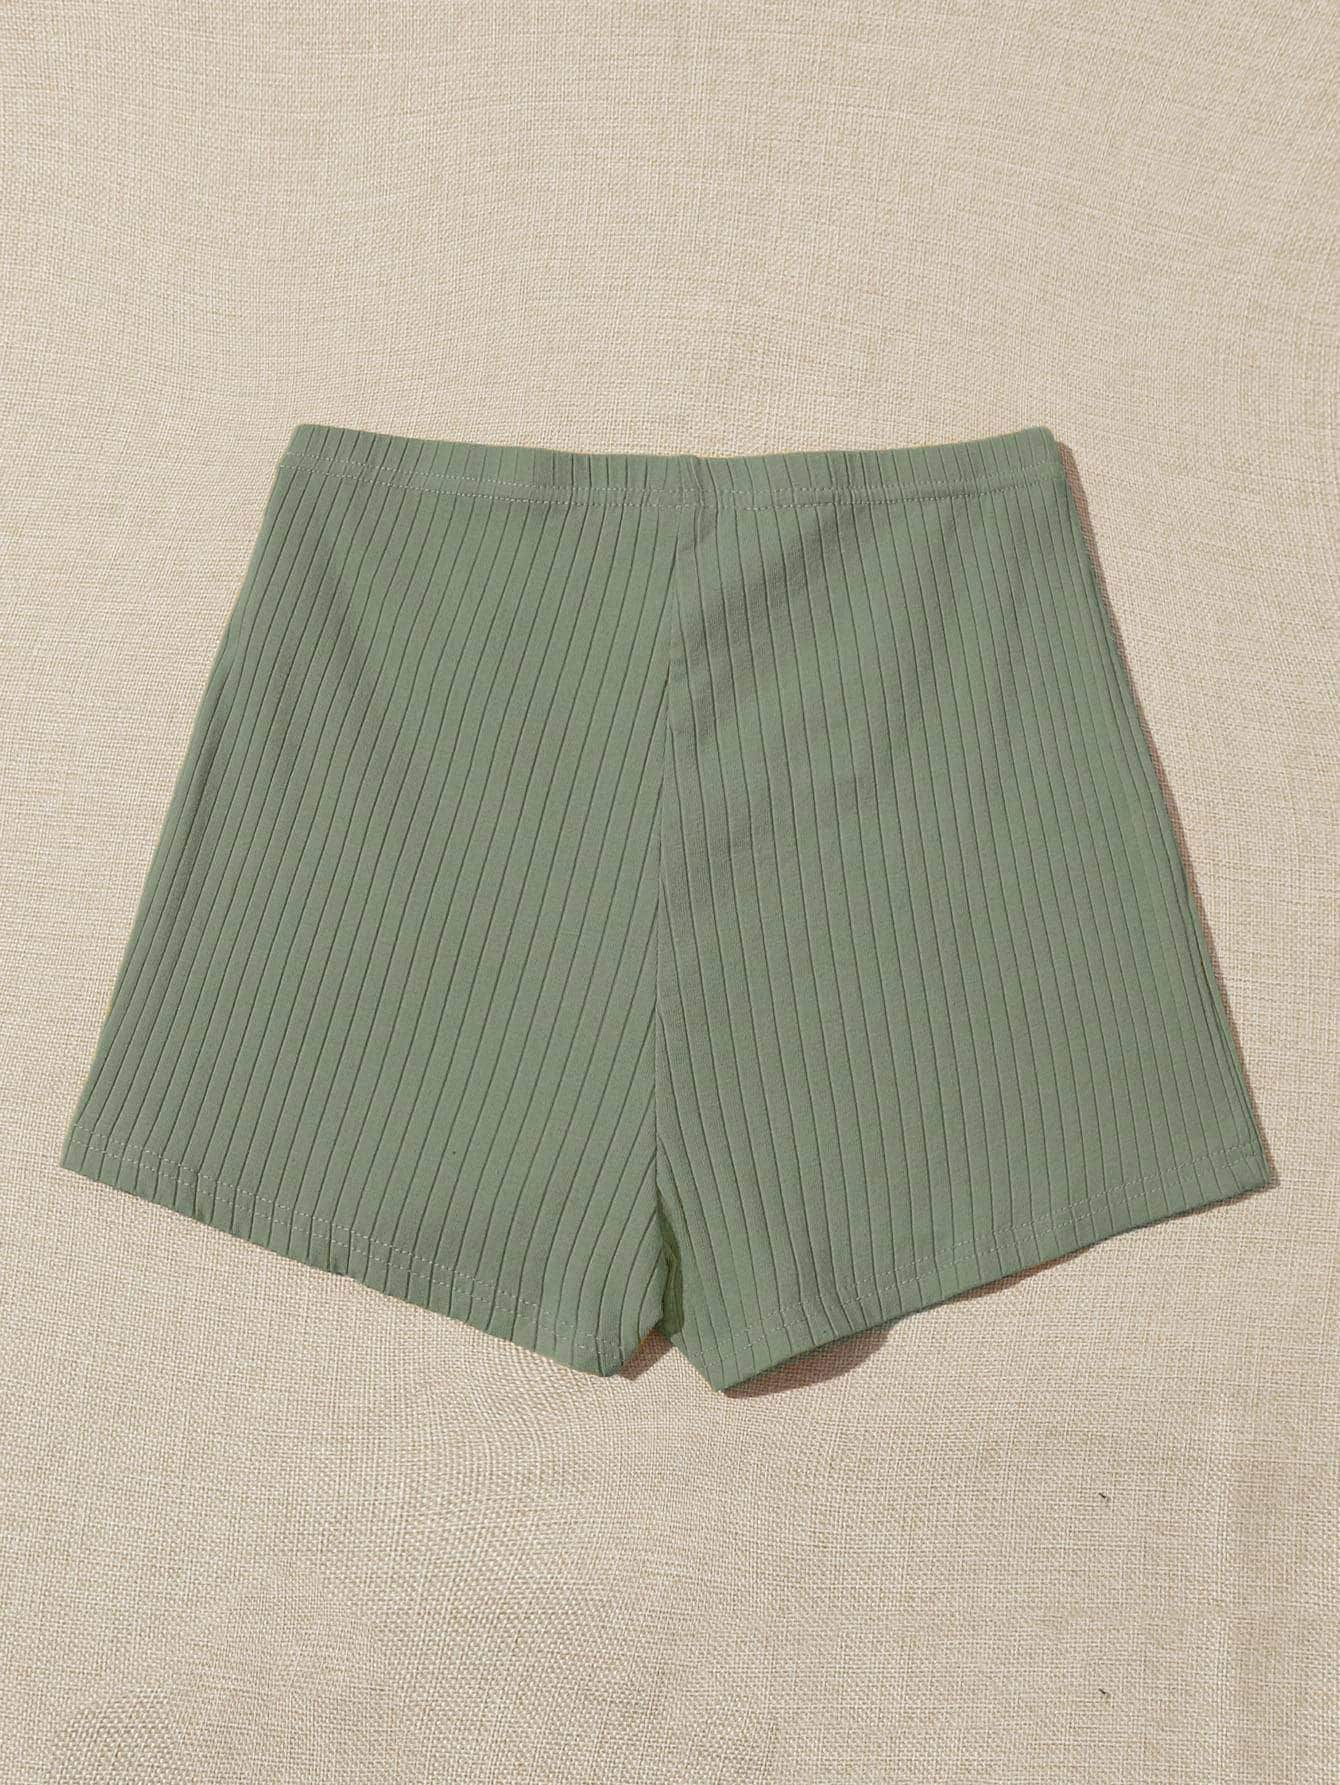 Verde militar / S SHEIN Shorts tejido de canalé de cintura elástica